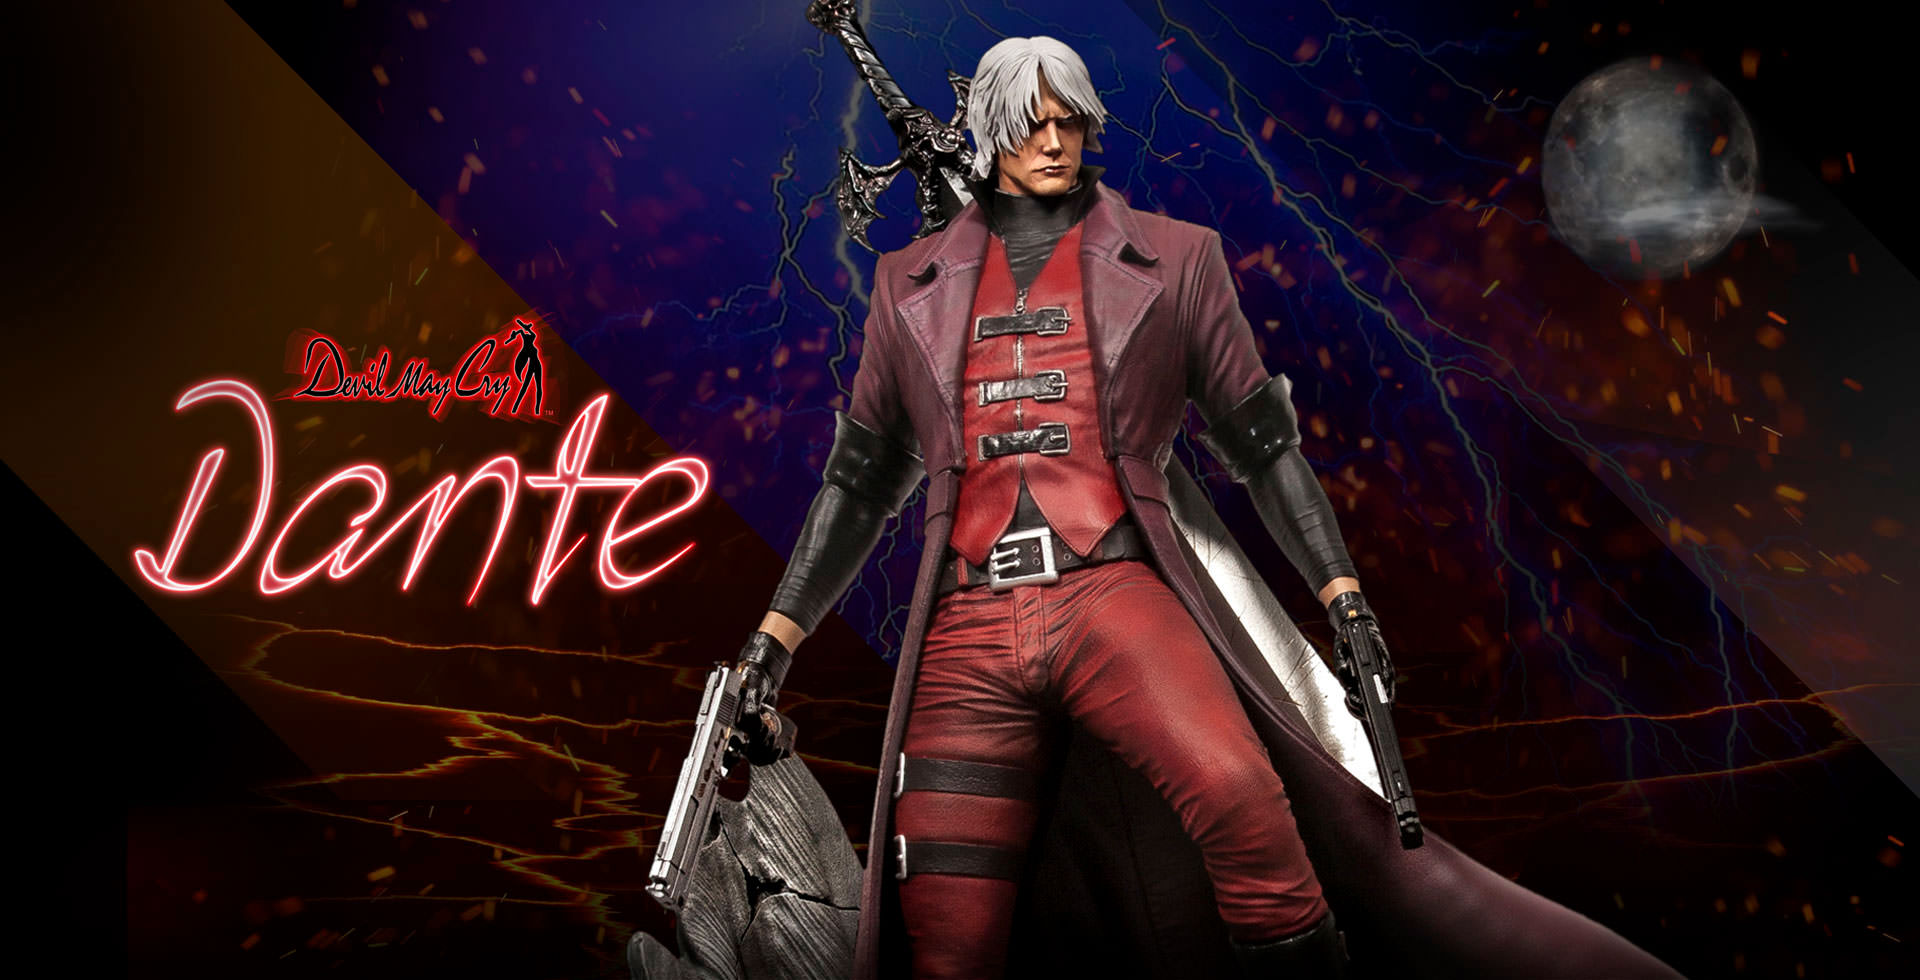 Dante Exclusive Edition (Prototype Shown) View 1